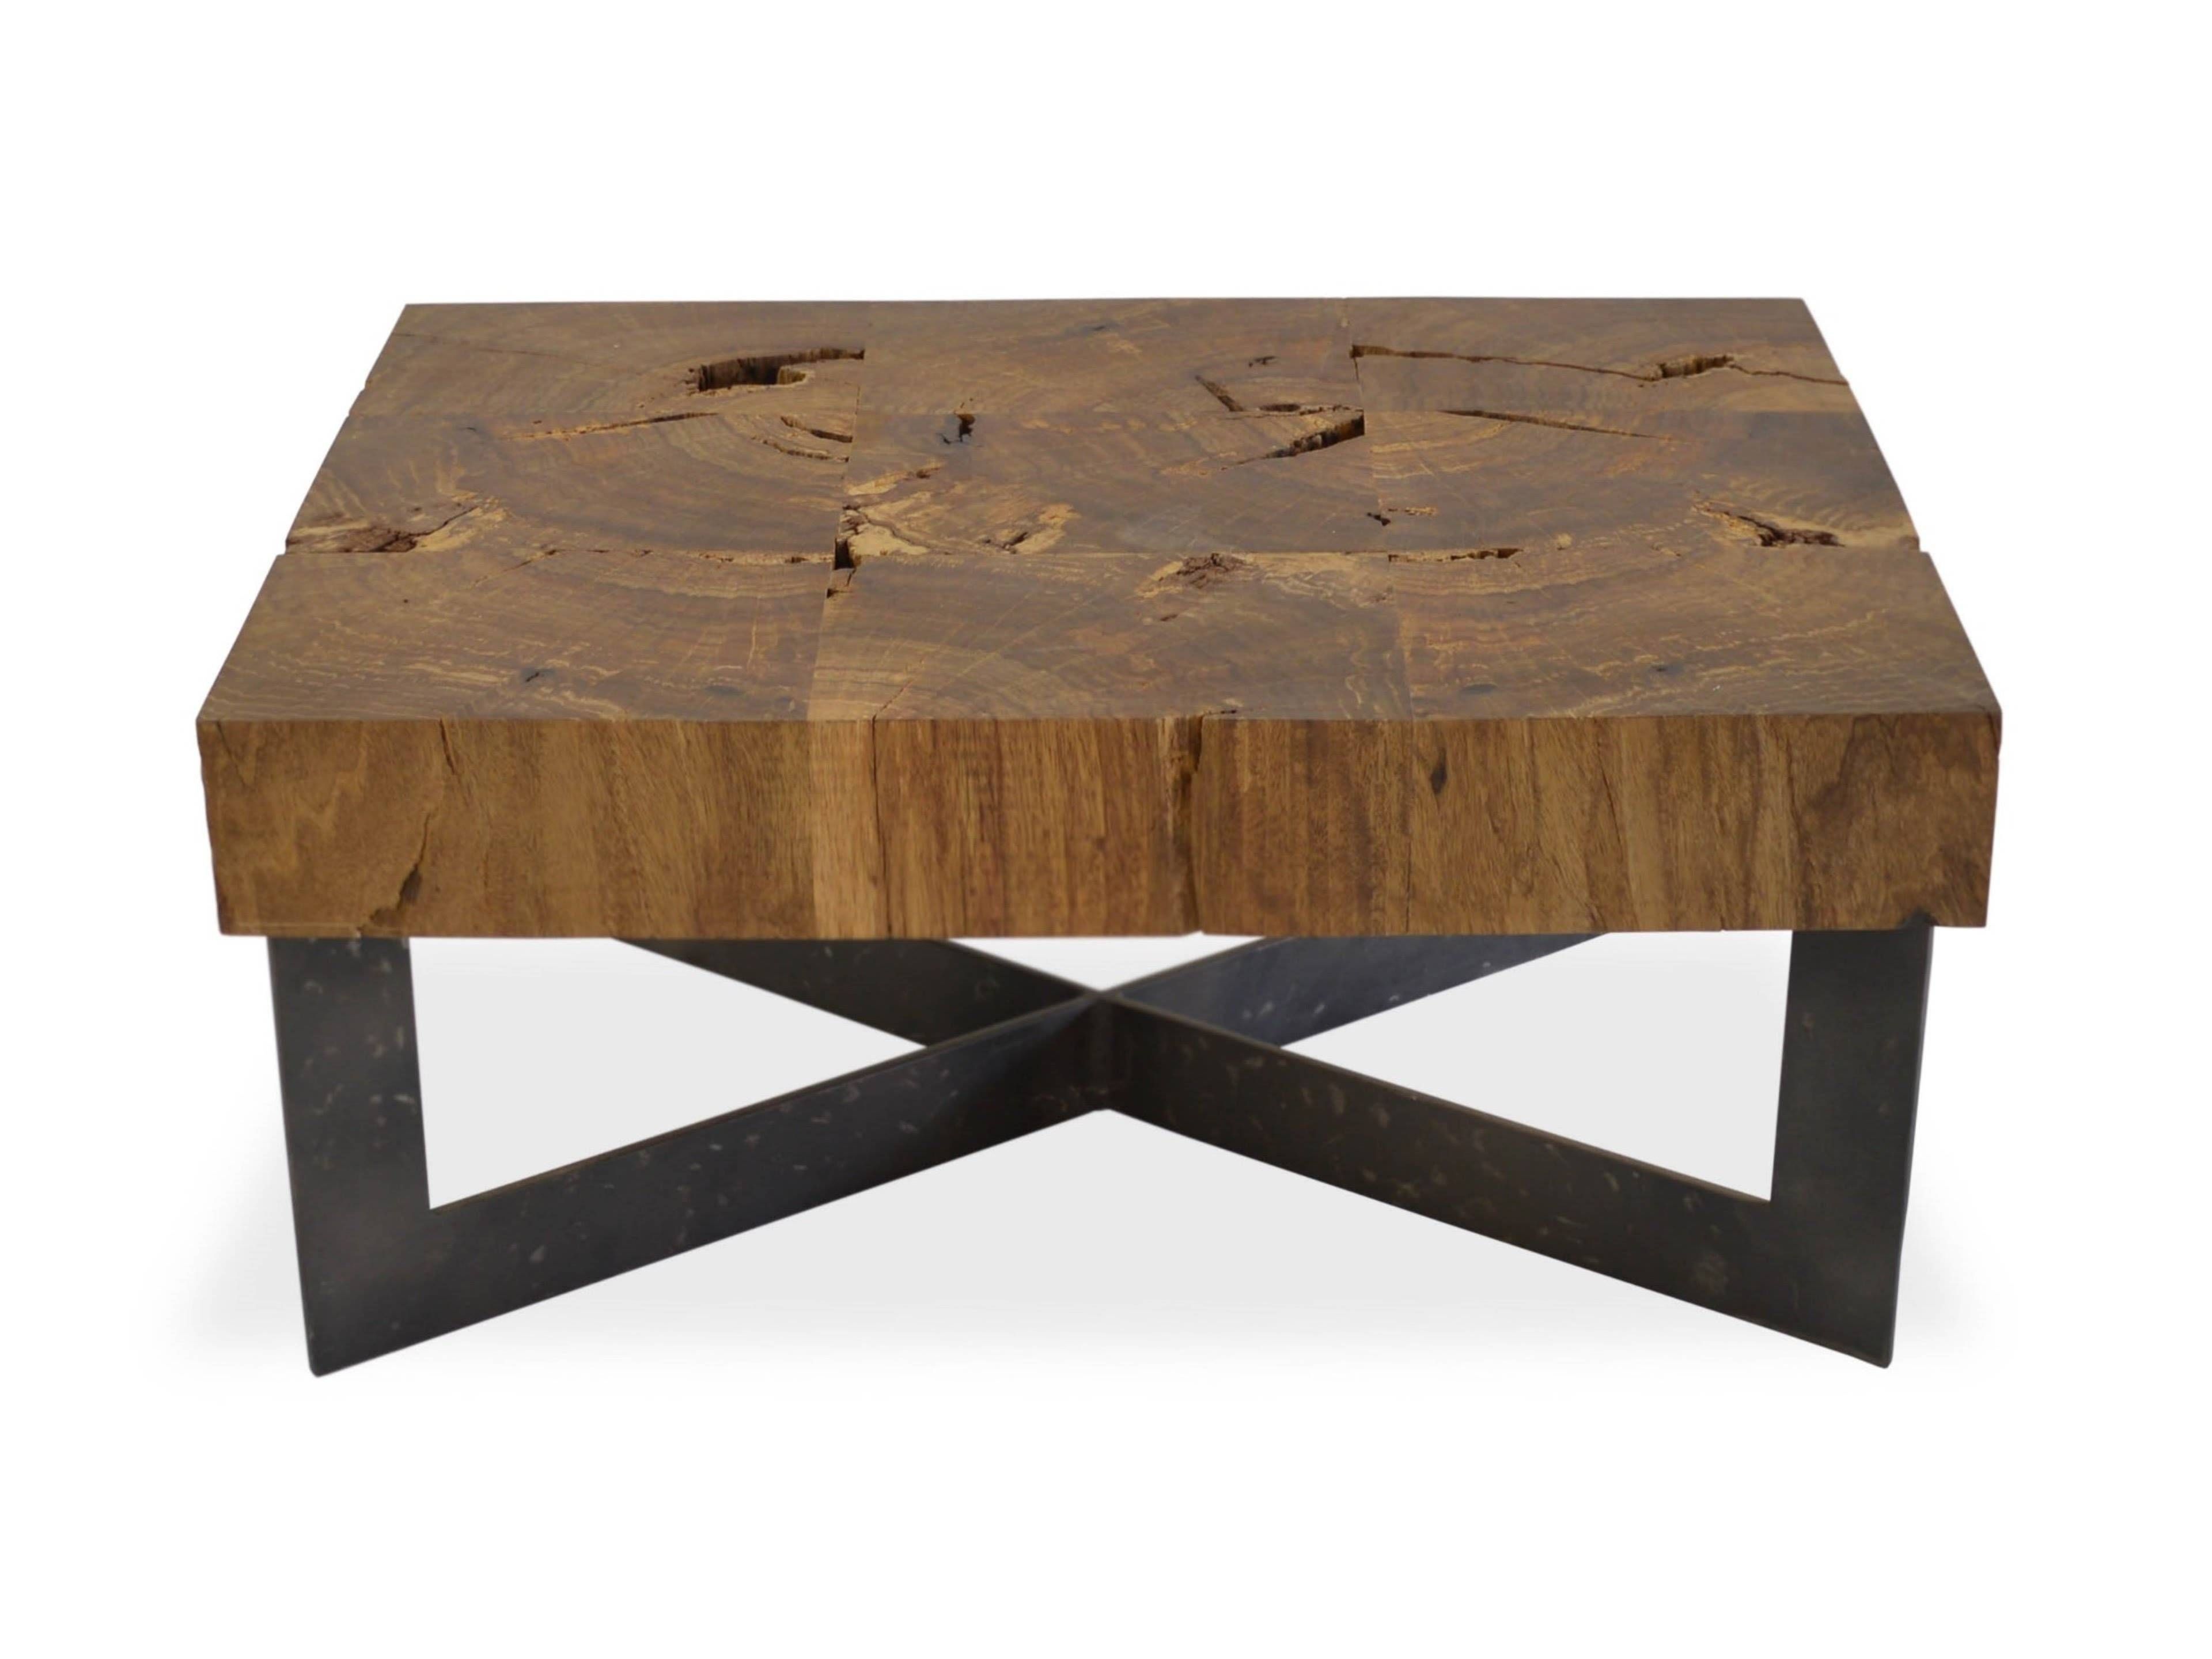 Creative Steel And Refurbished Wood Coffee Table – Youtube For Metal And Wood Coffee Tables (View 2 of 15)